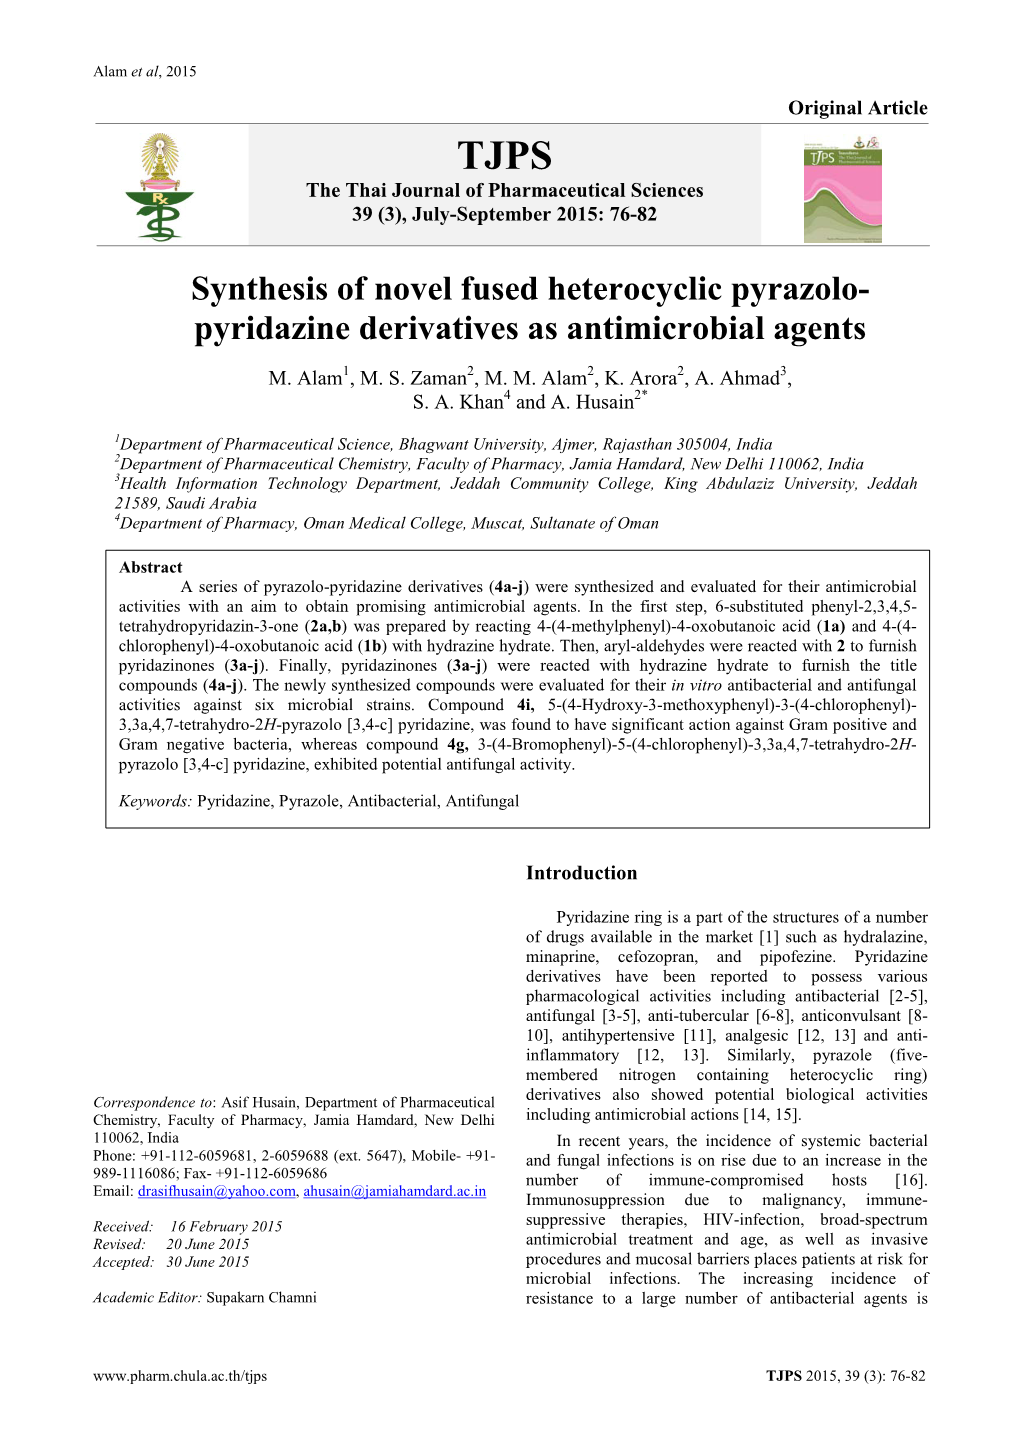 Synthesis of Novel Fused Heterocyclic Pyrazolo- Pyridazine Derivatives As